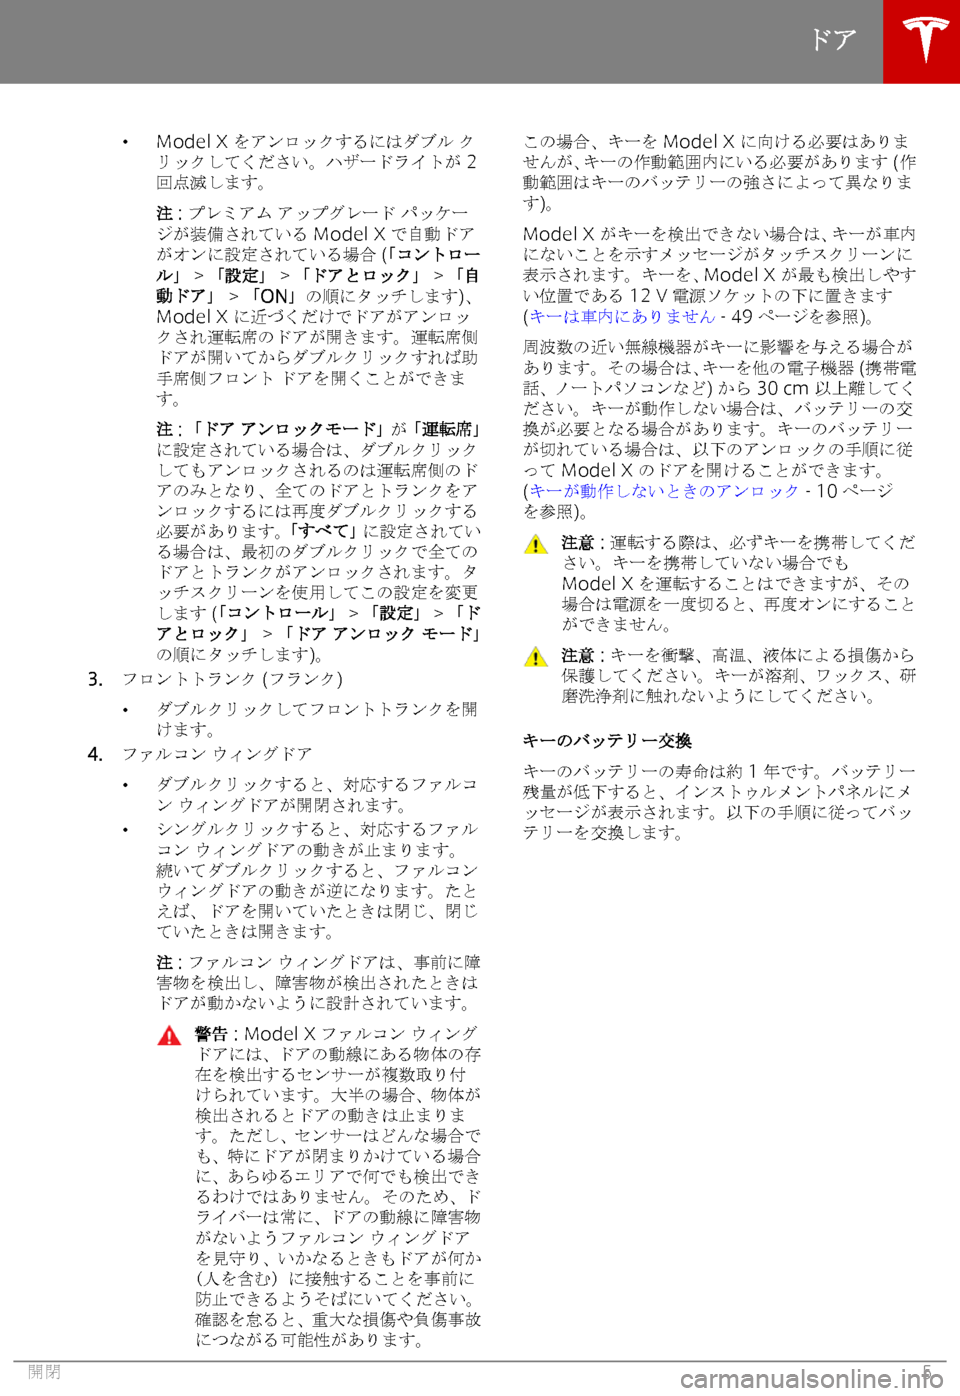 TESLA MODEL X 2018  取扱説明書 (in Japanese) �w �M�o�d�e�l� �X� 